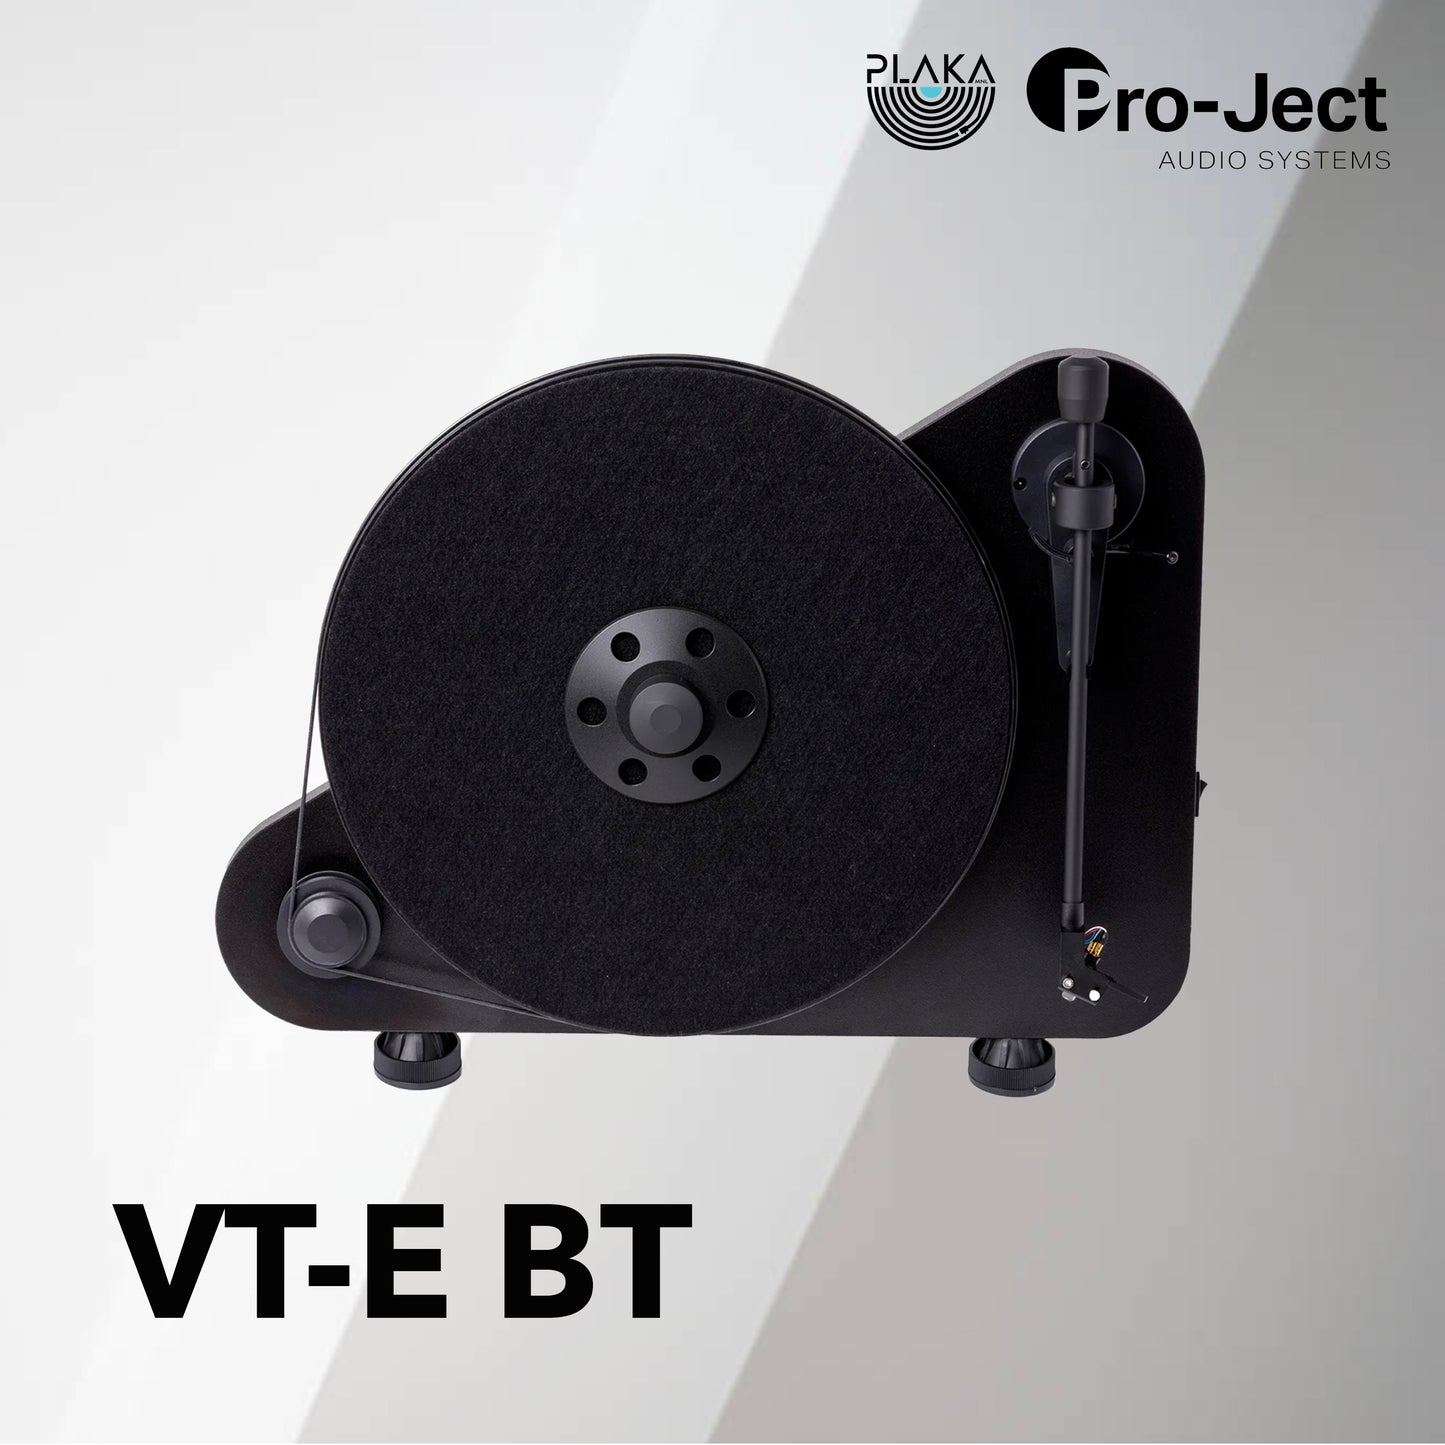 Pro-ject VT-E BT Turntable